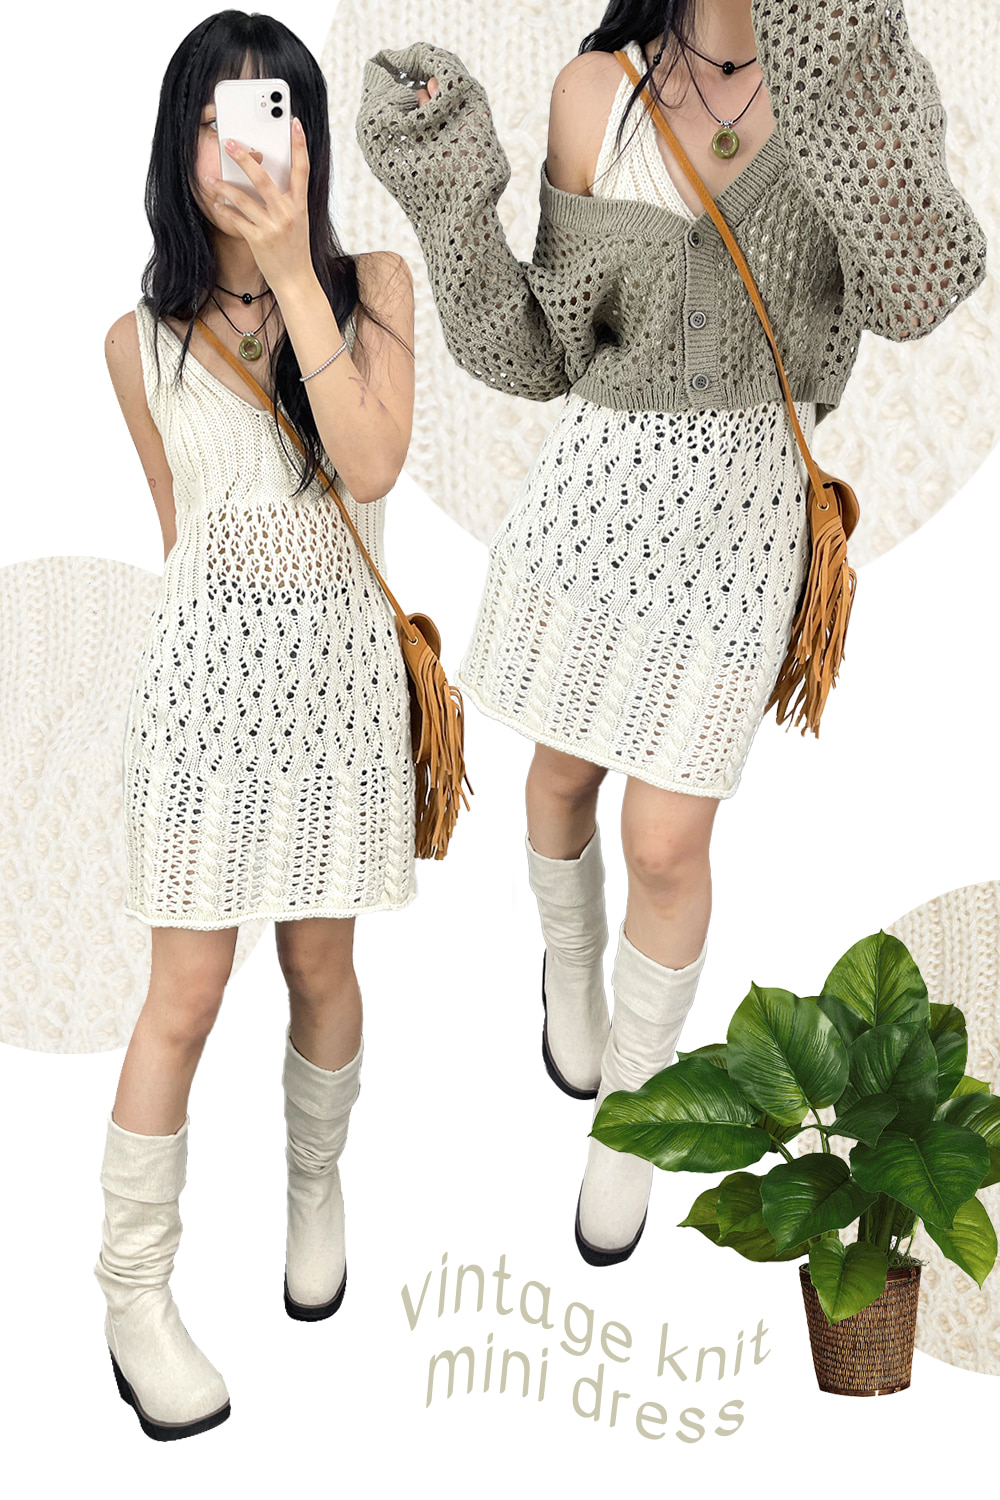 vintage knit mini dress